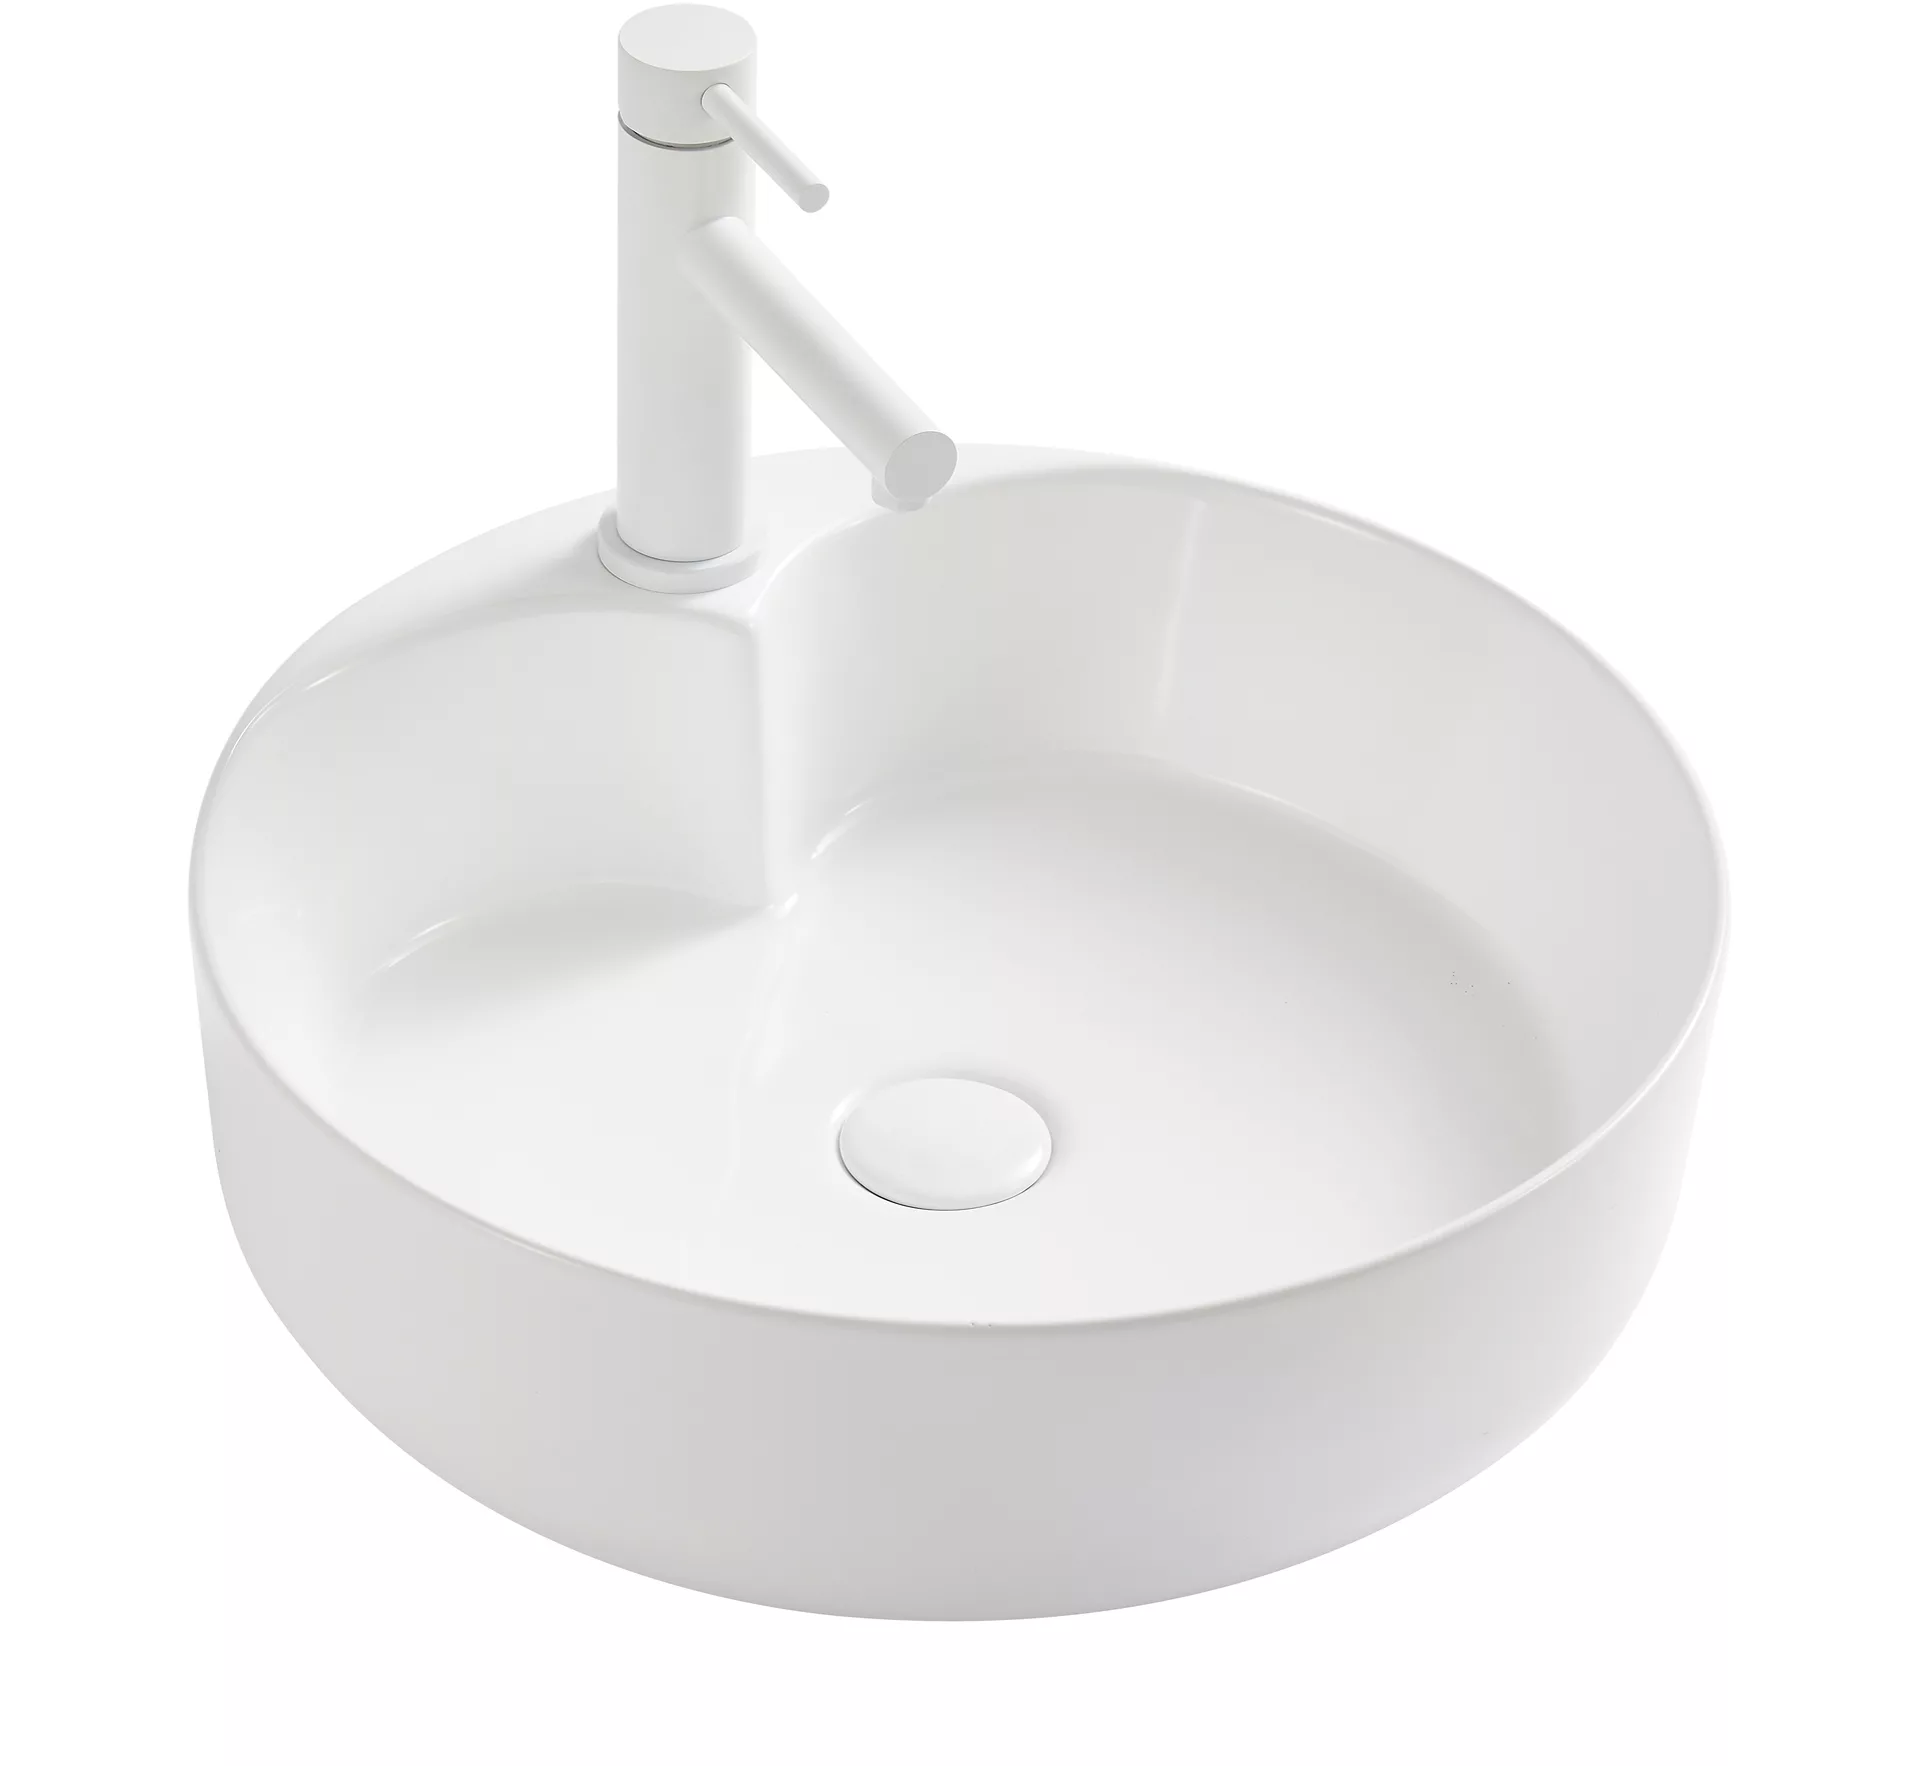 Накладная белая раковина для ванной GiD N9013 круглая керамическая